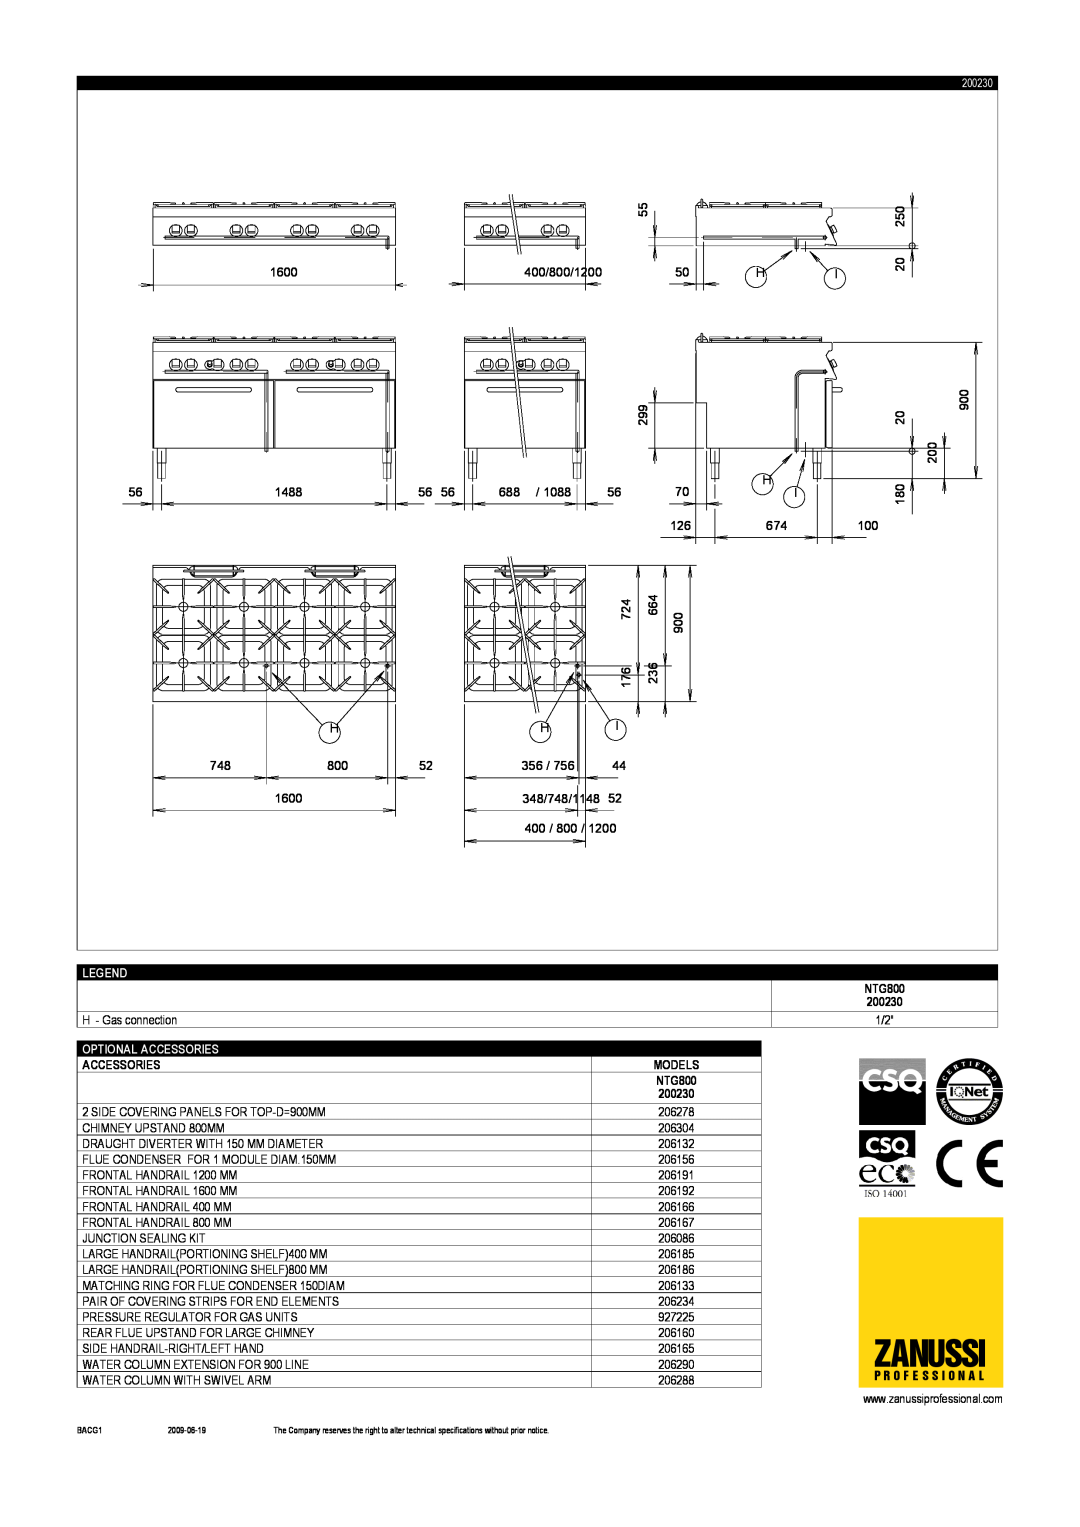 Zanussi NTG800 dimensions Zanussi, 200230, Optional Accessories, Models 